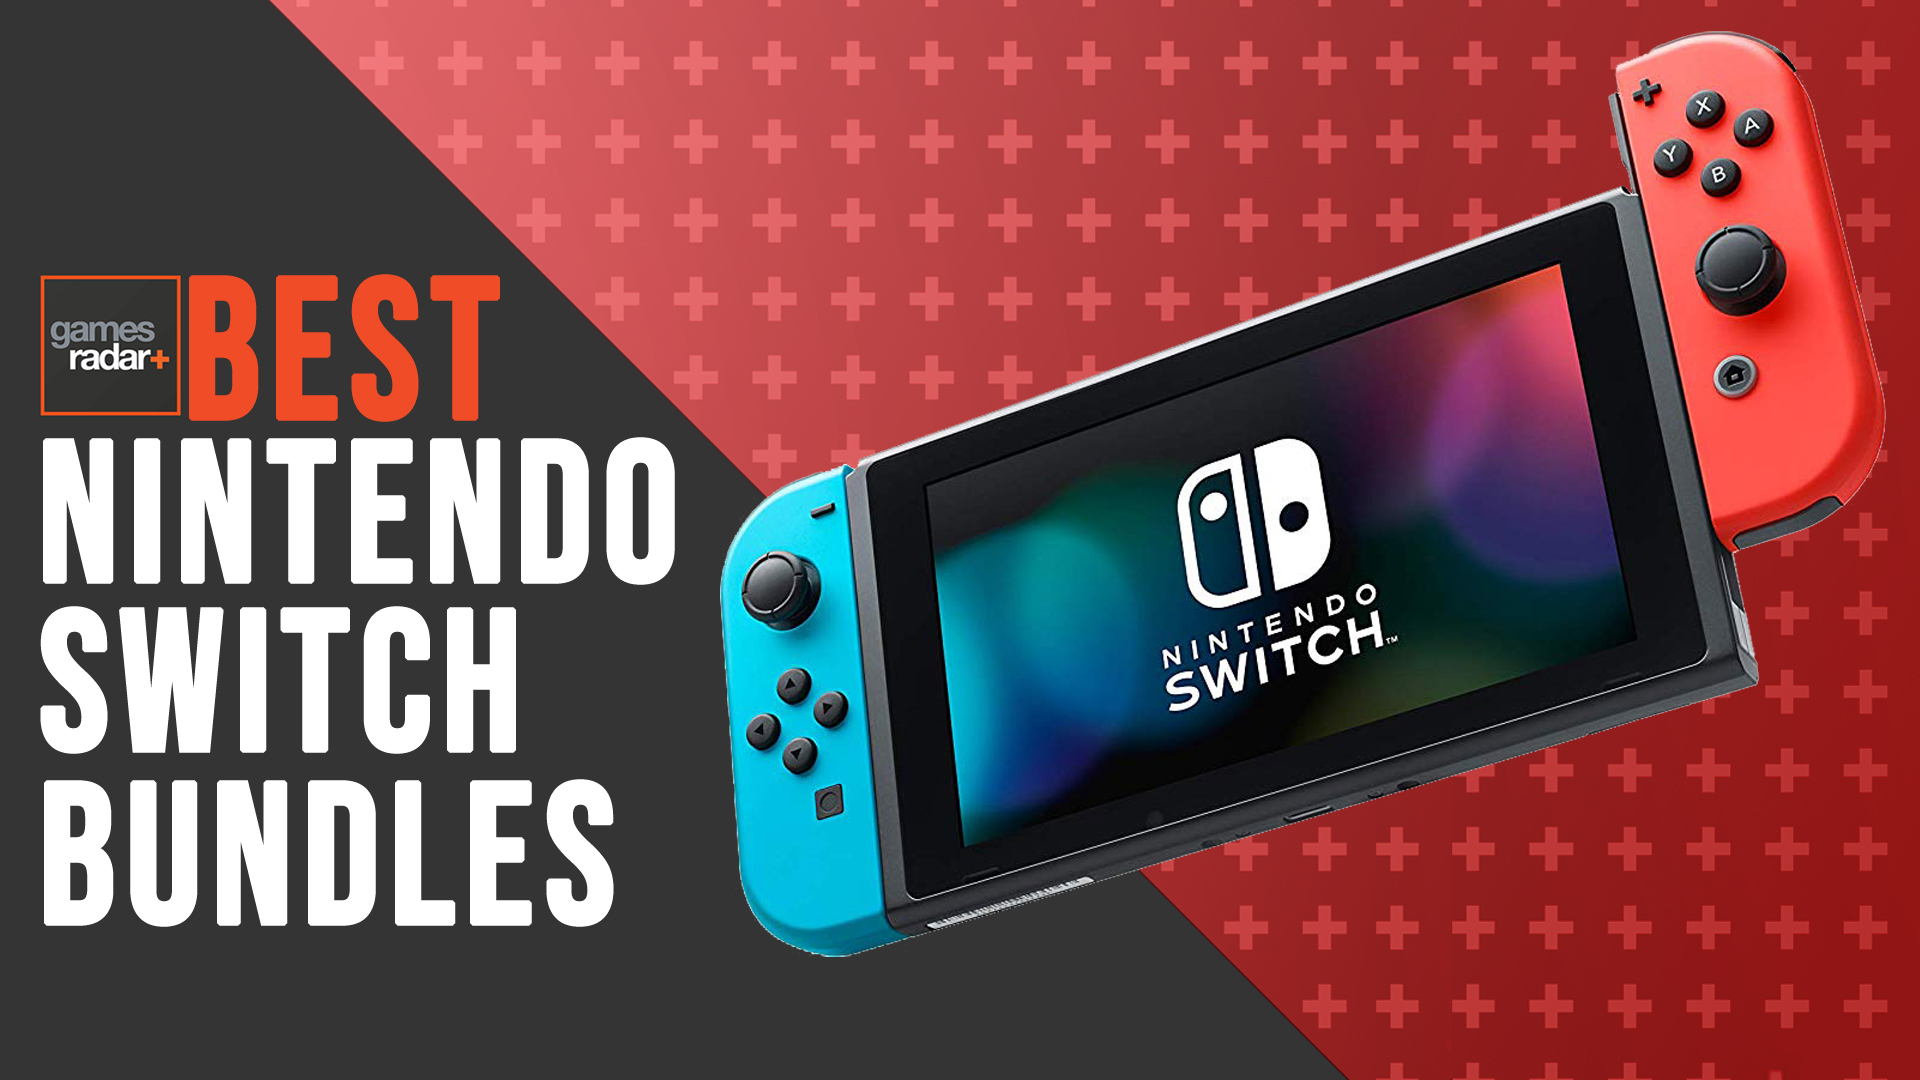 Buy a Nintendo Switch Dock Set
